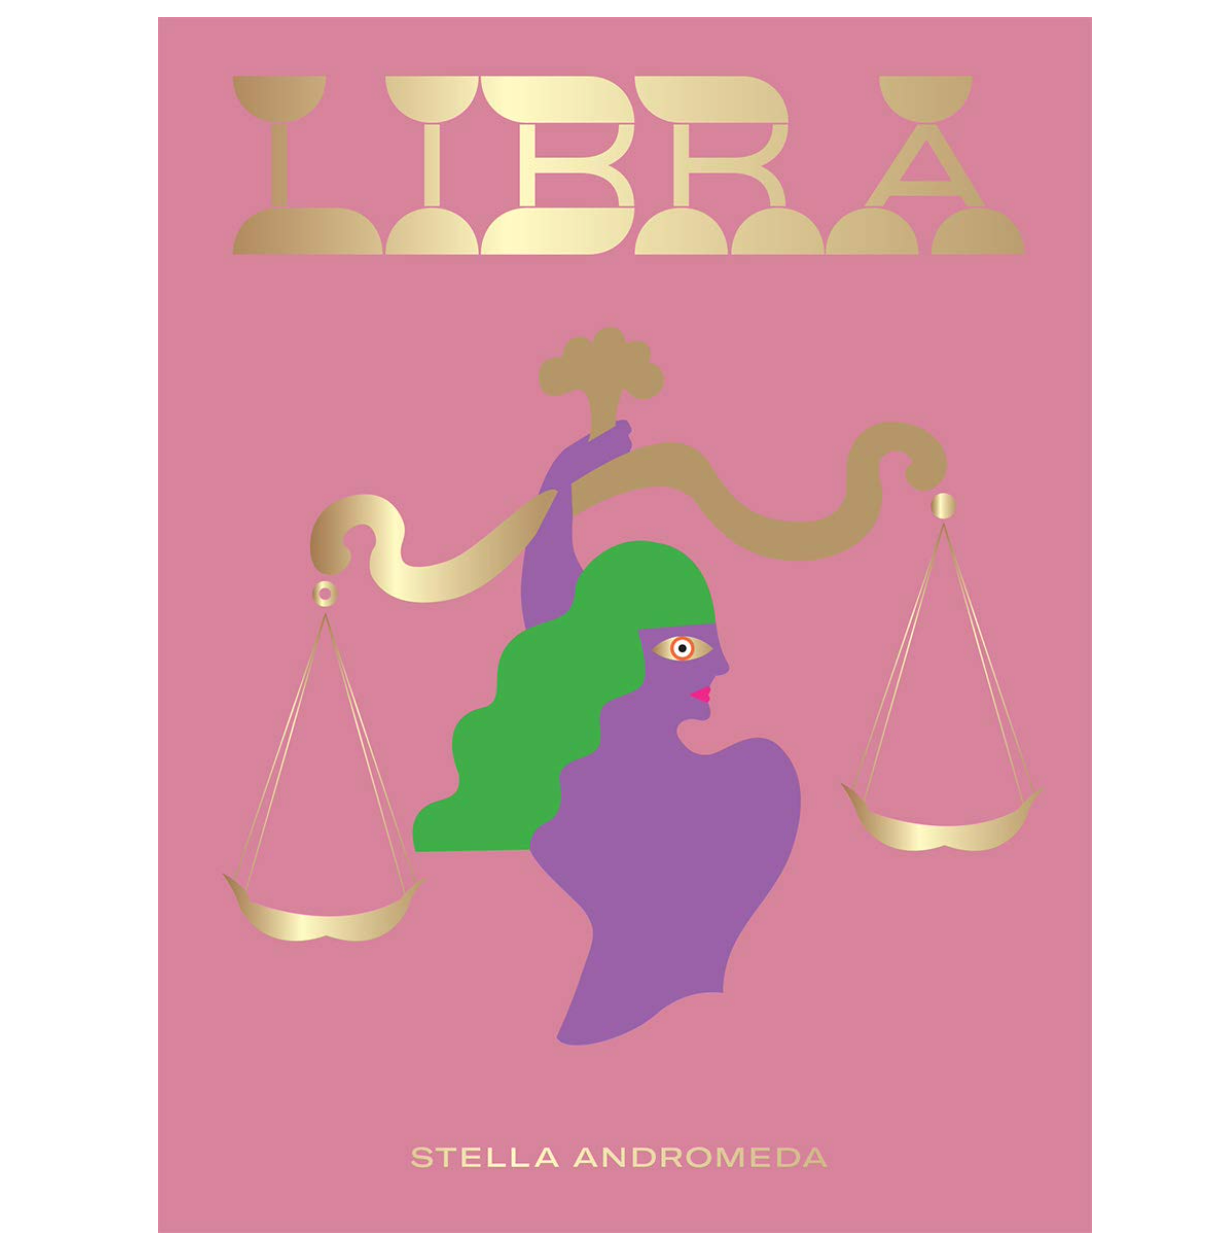 LIBRA: astrology book